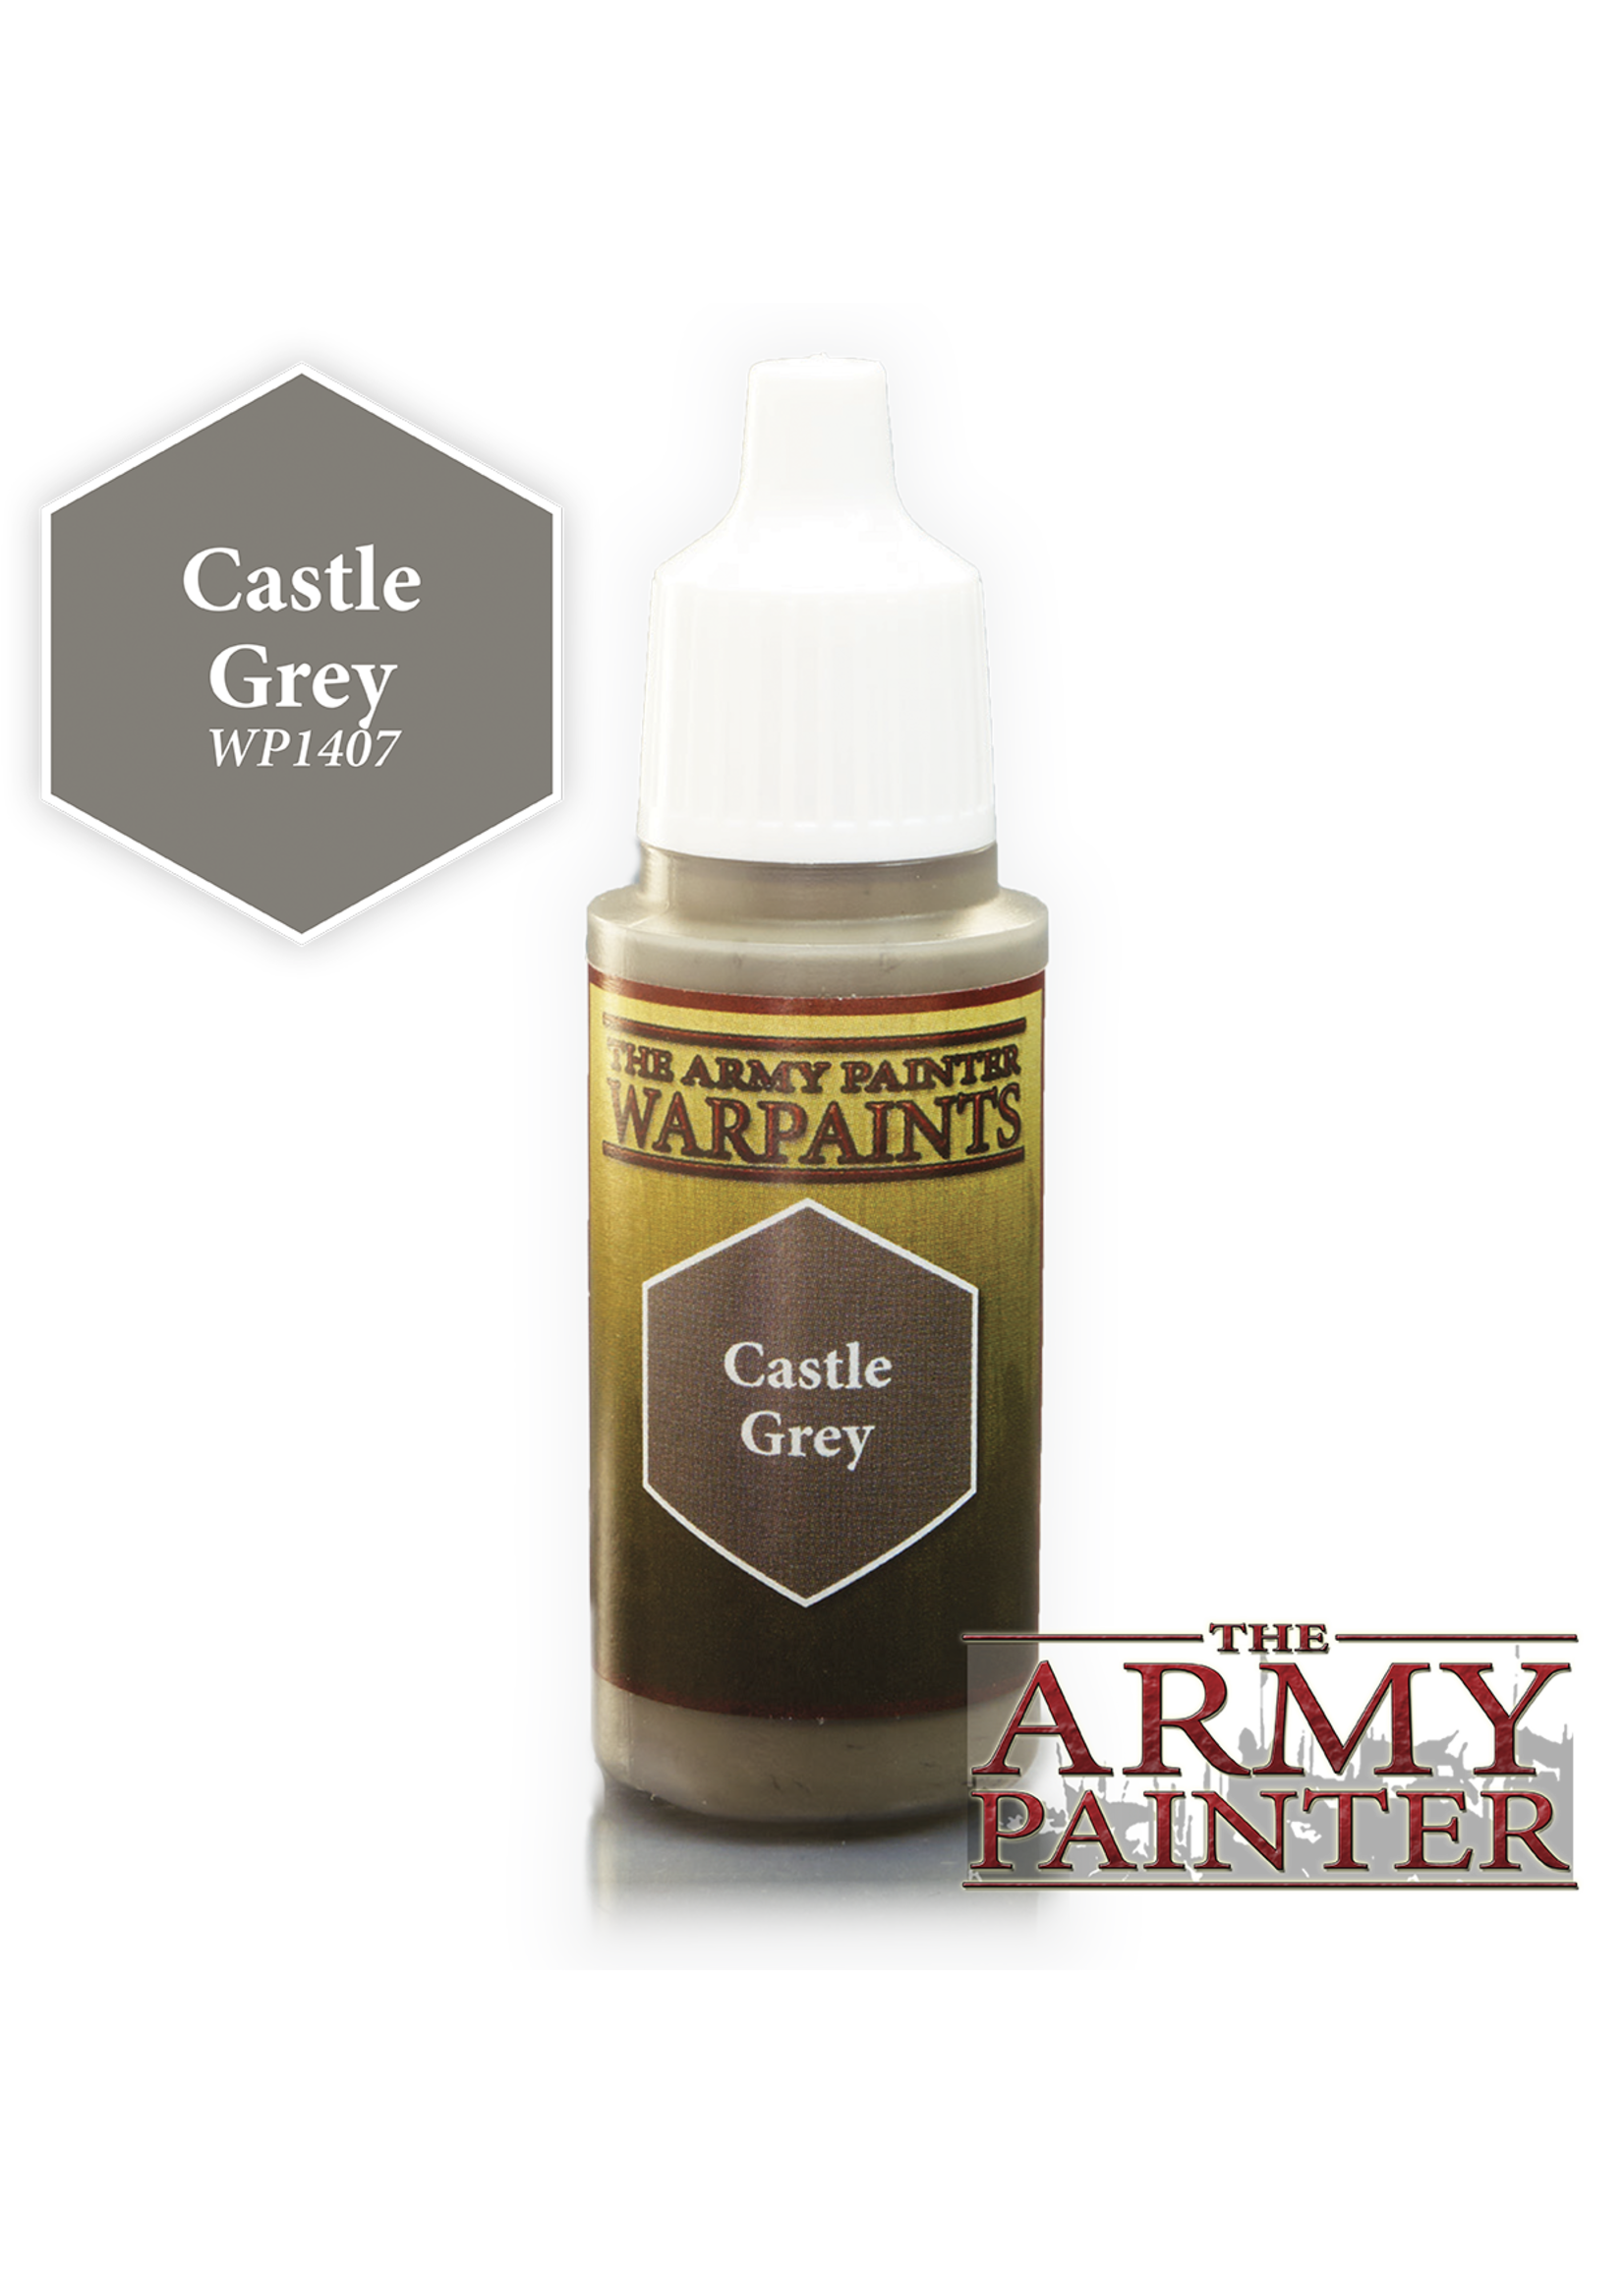 The Army Painter Acrylics Warpaints Castle Grey